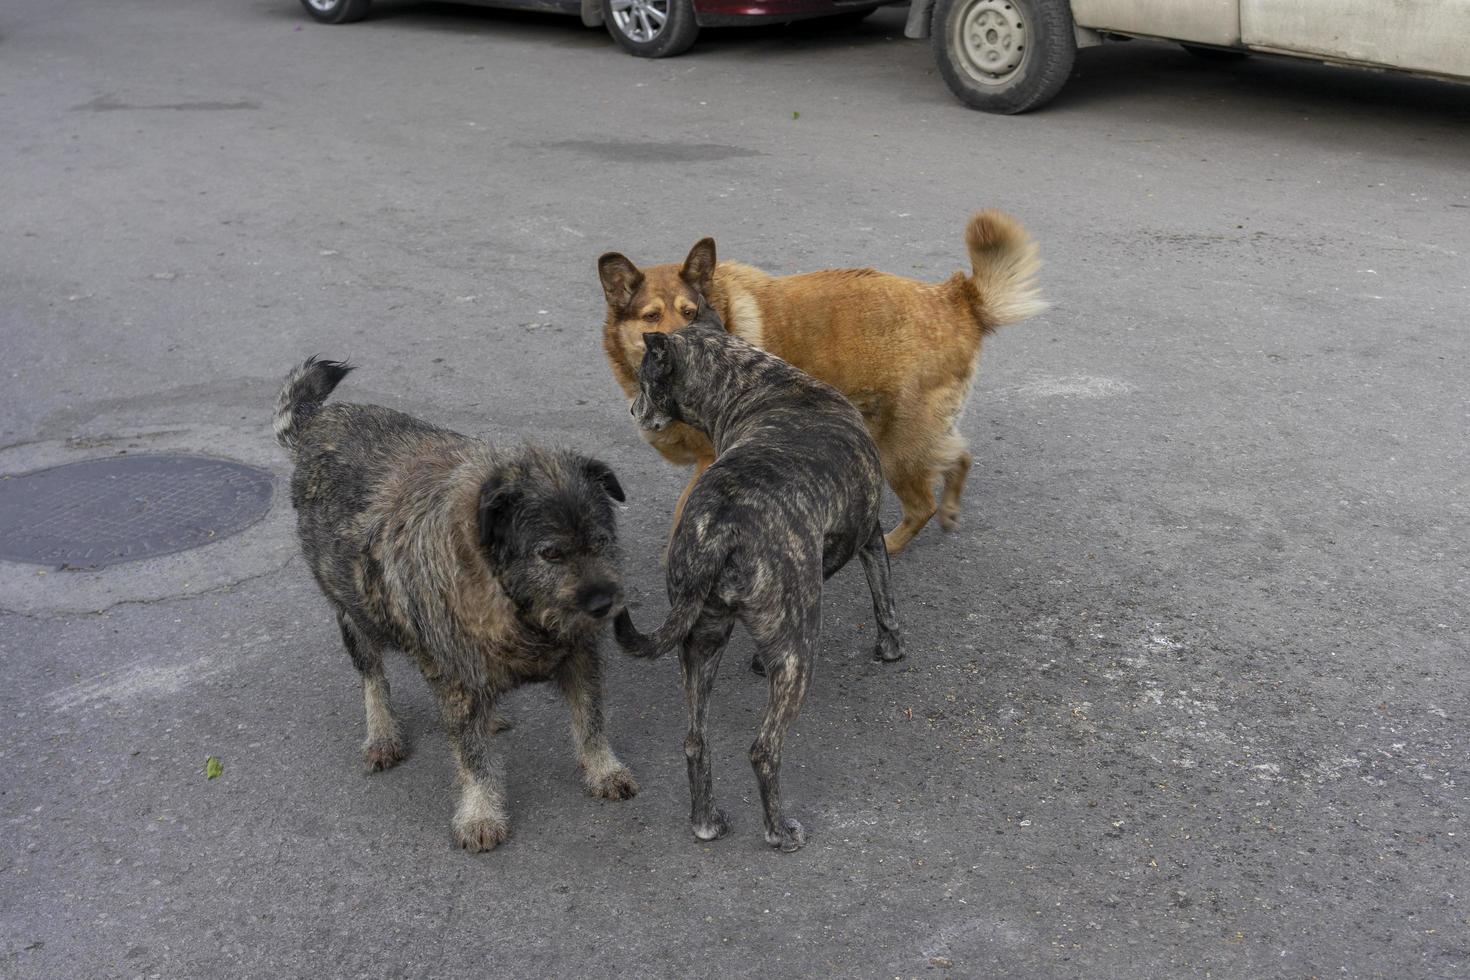 Street dogs on the road near cars. Yalta, Crimea photo